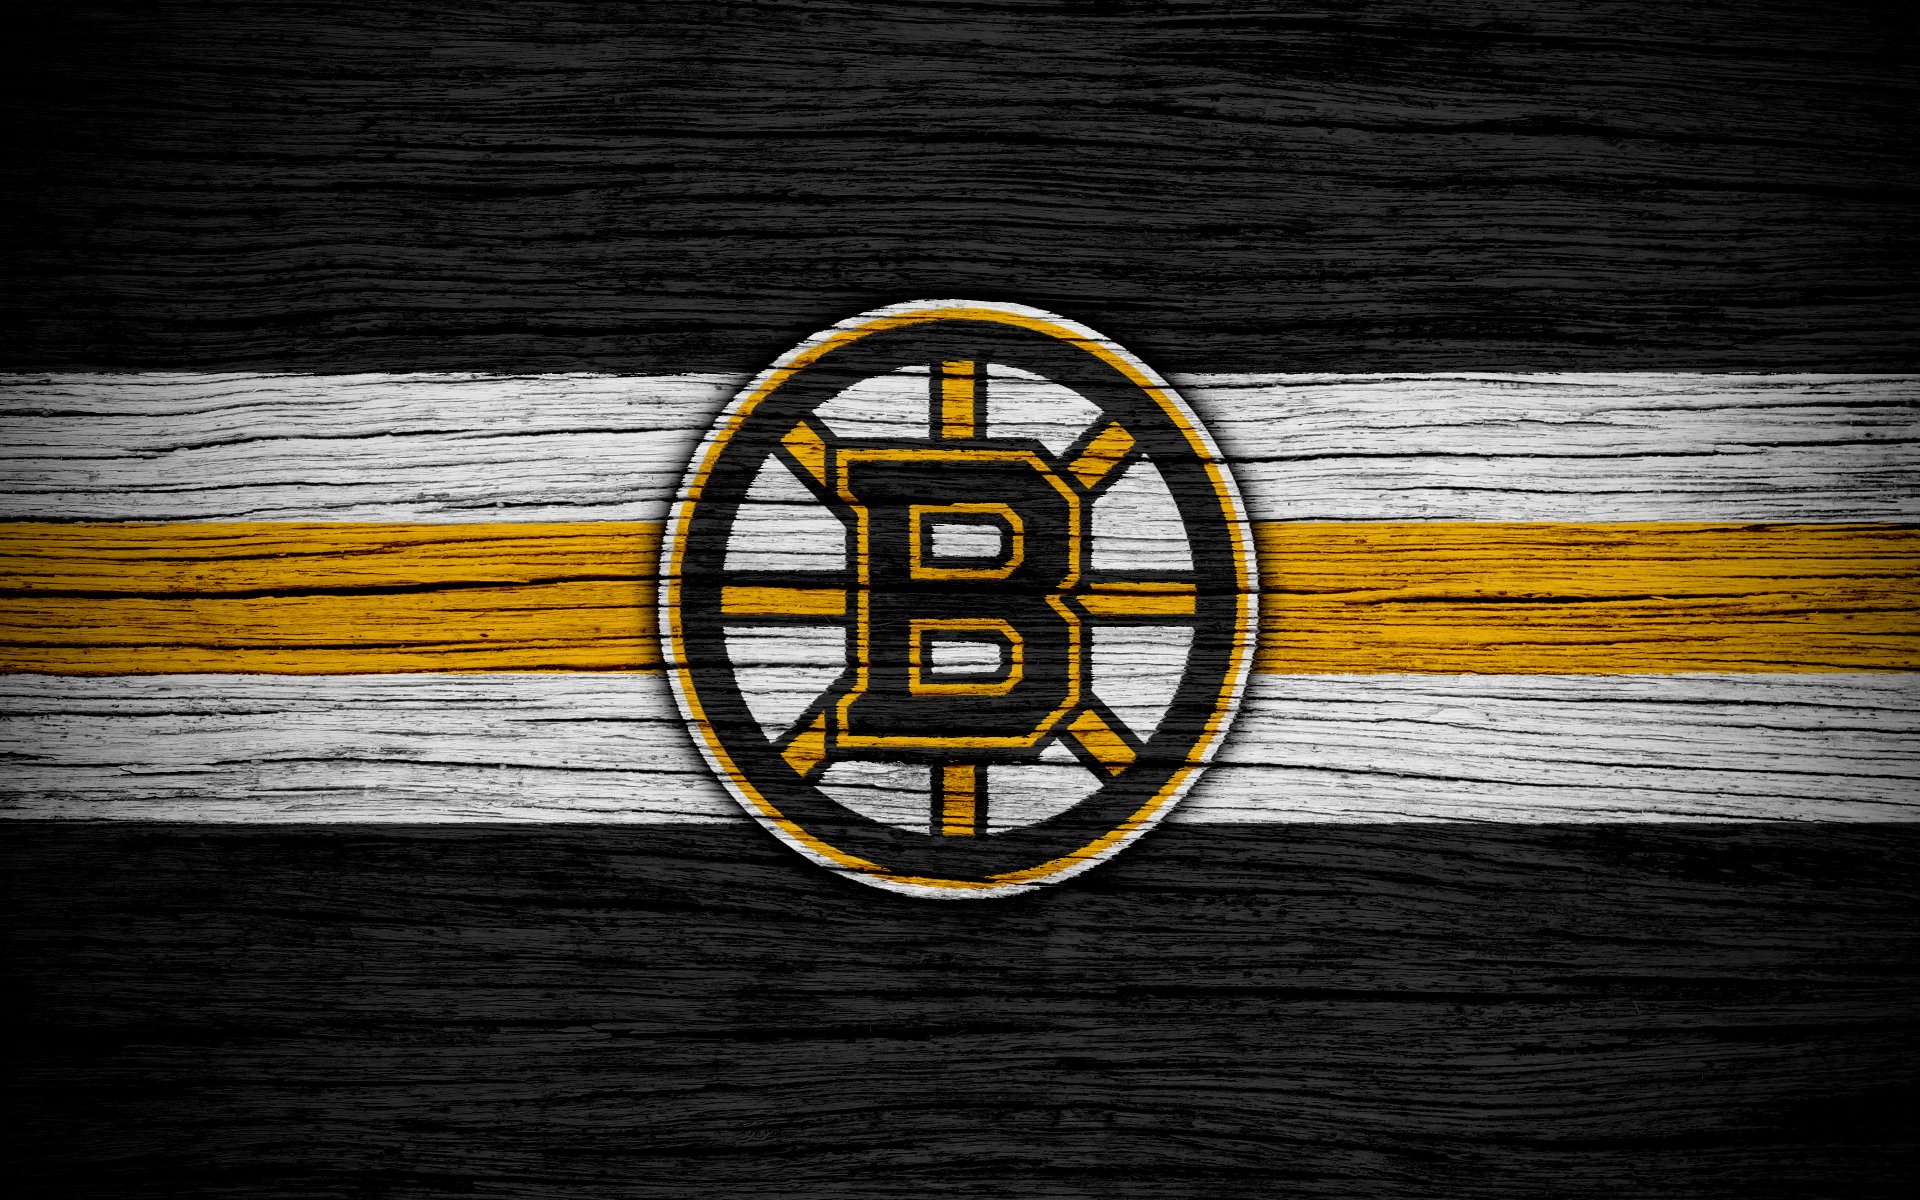 Boston Bruins 4k Ultra HD Wallpaper Background Image 3840x2400 ID.